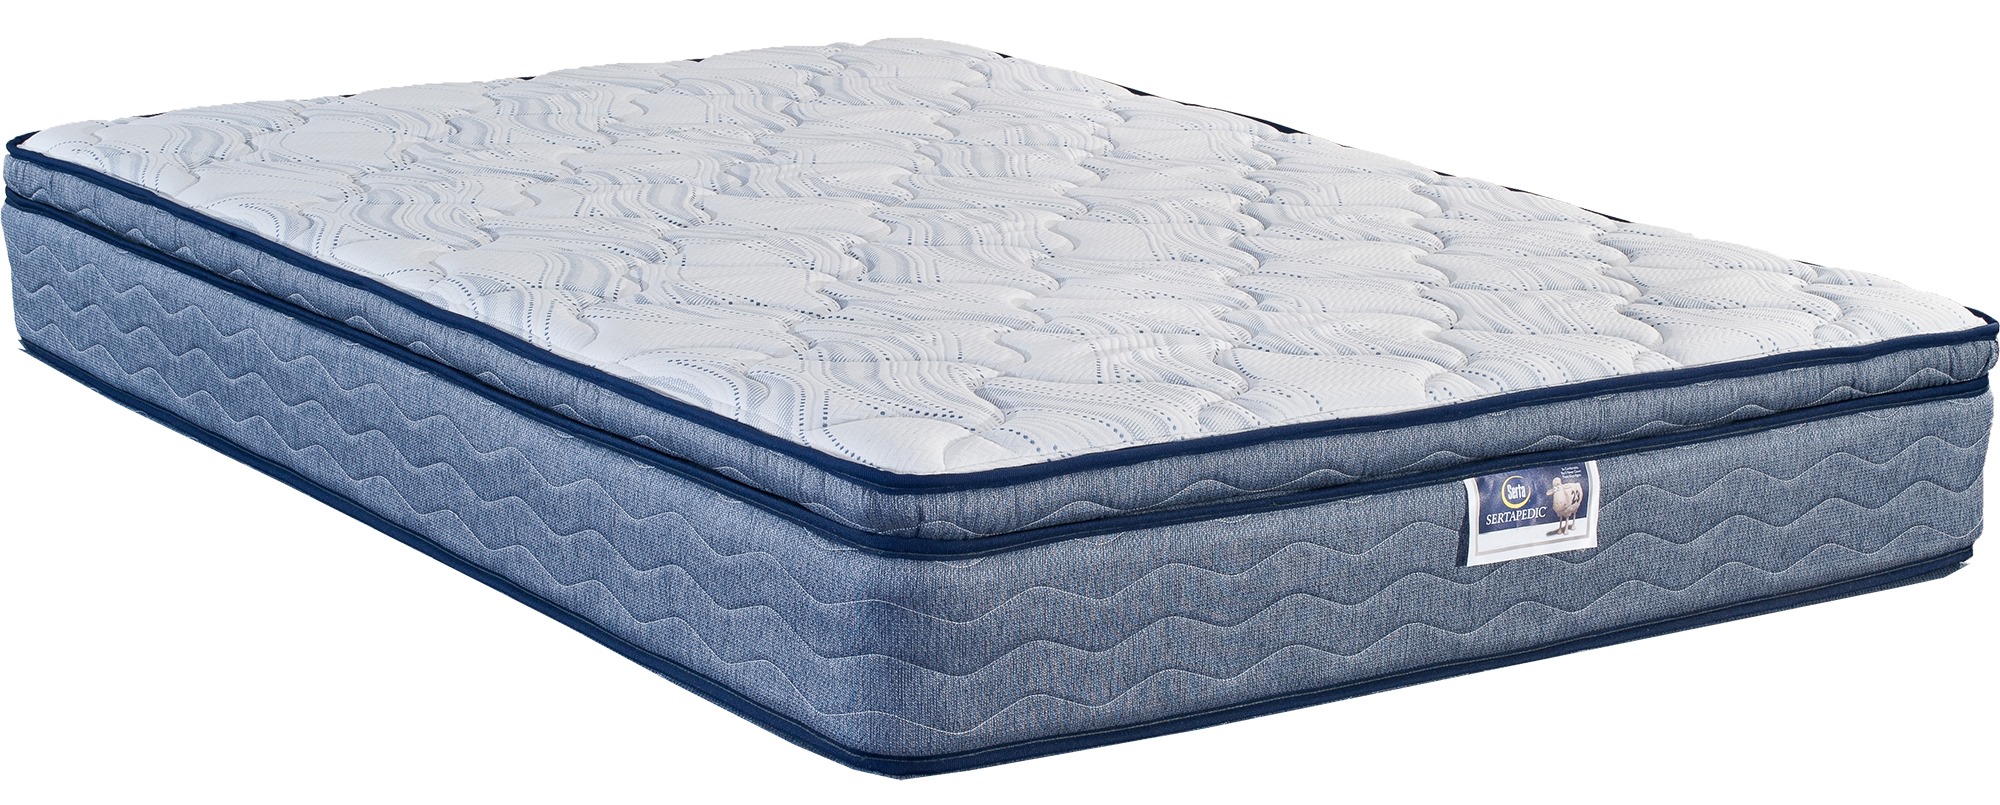 serta meadowbrook euro top mattress